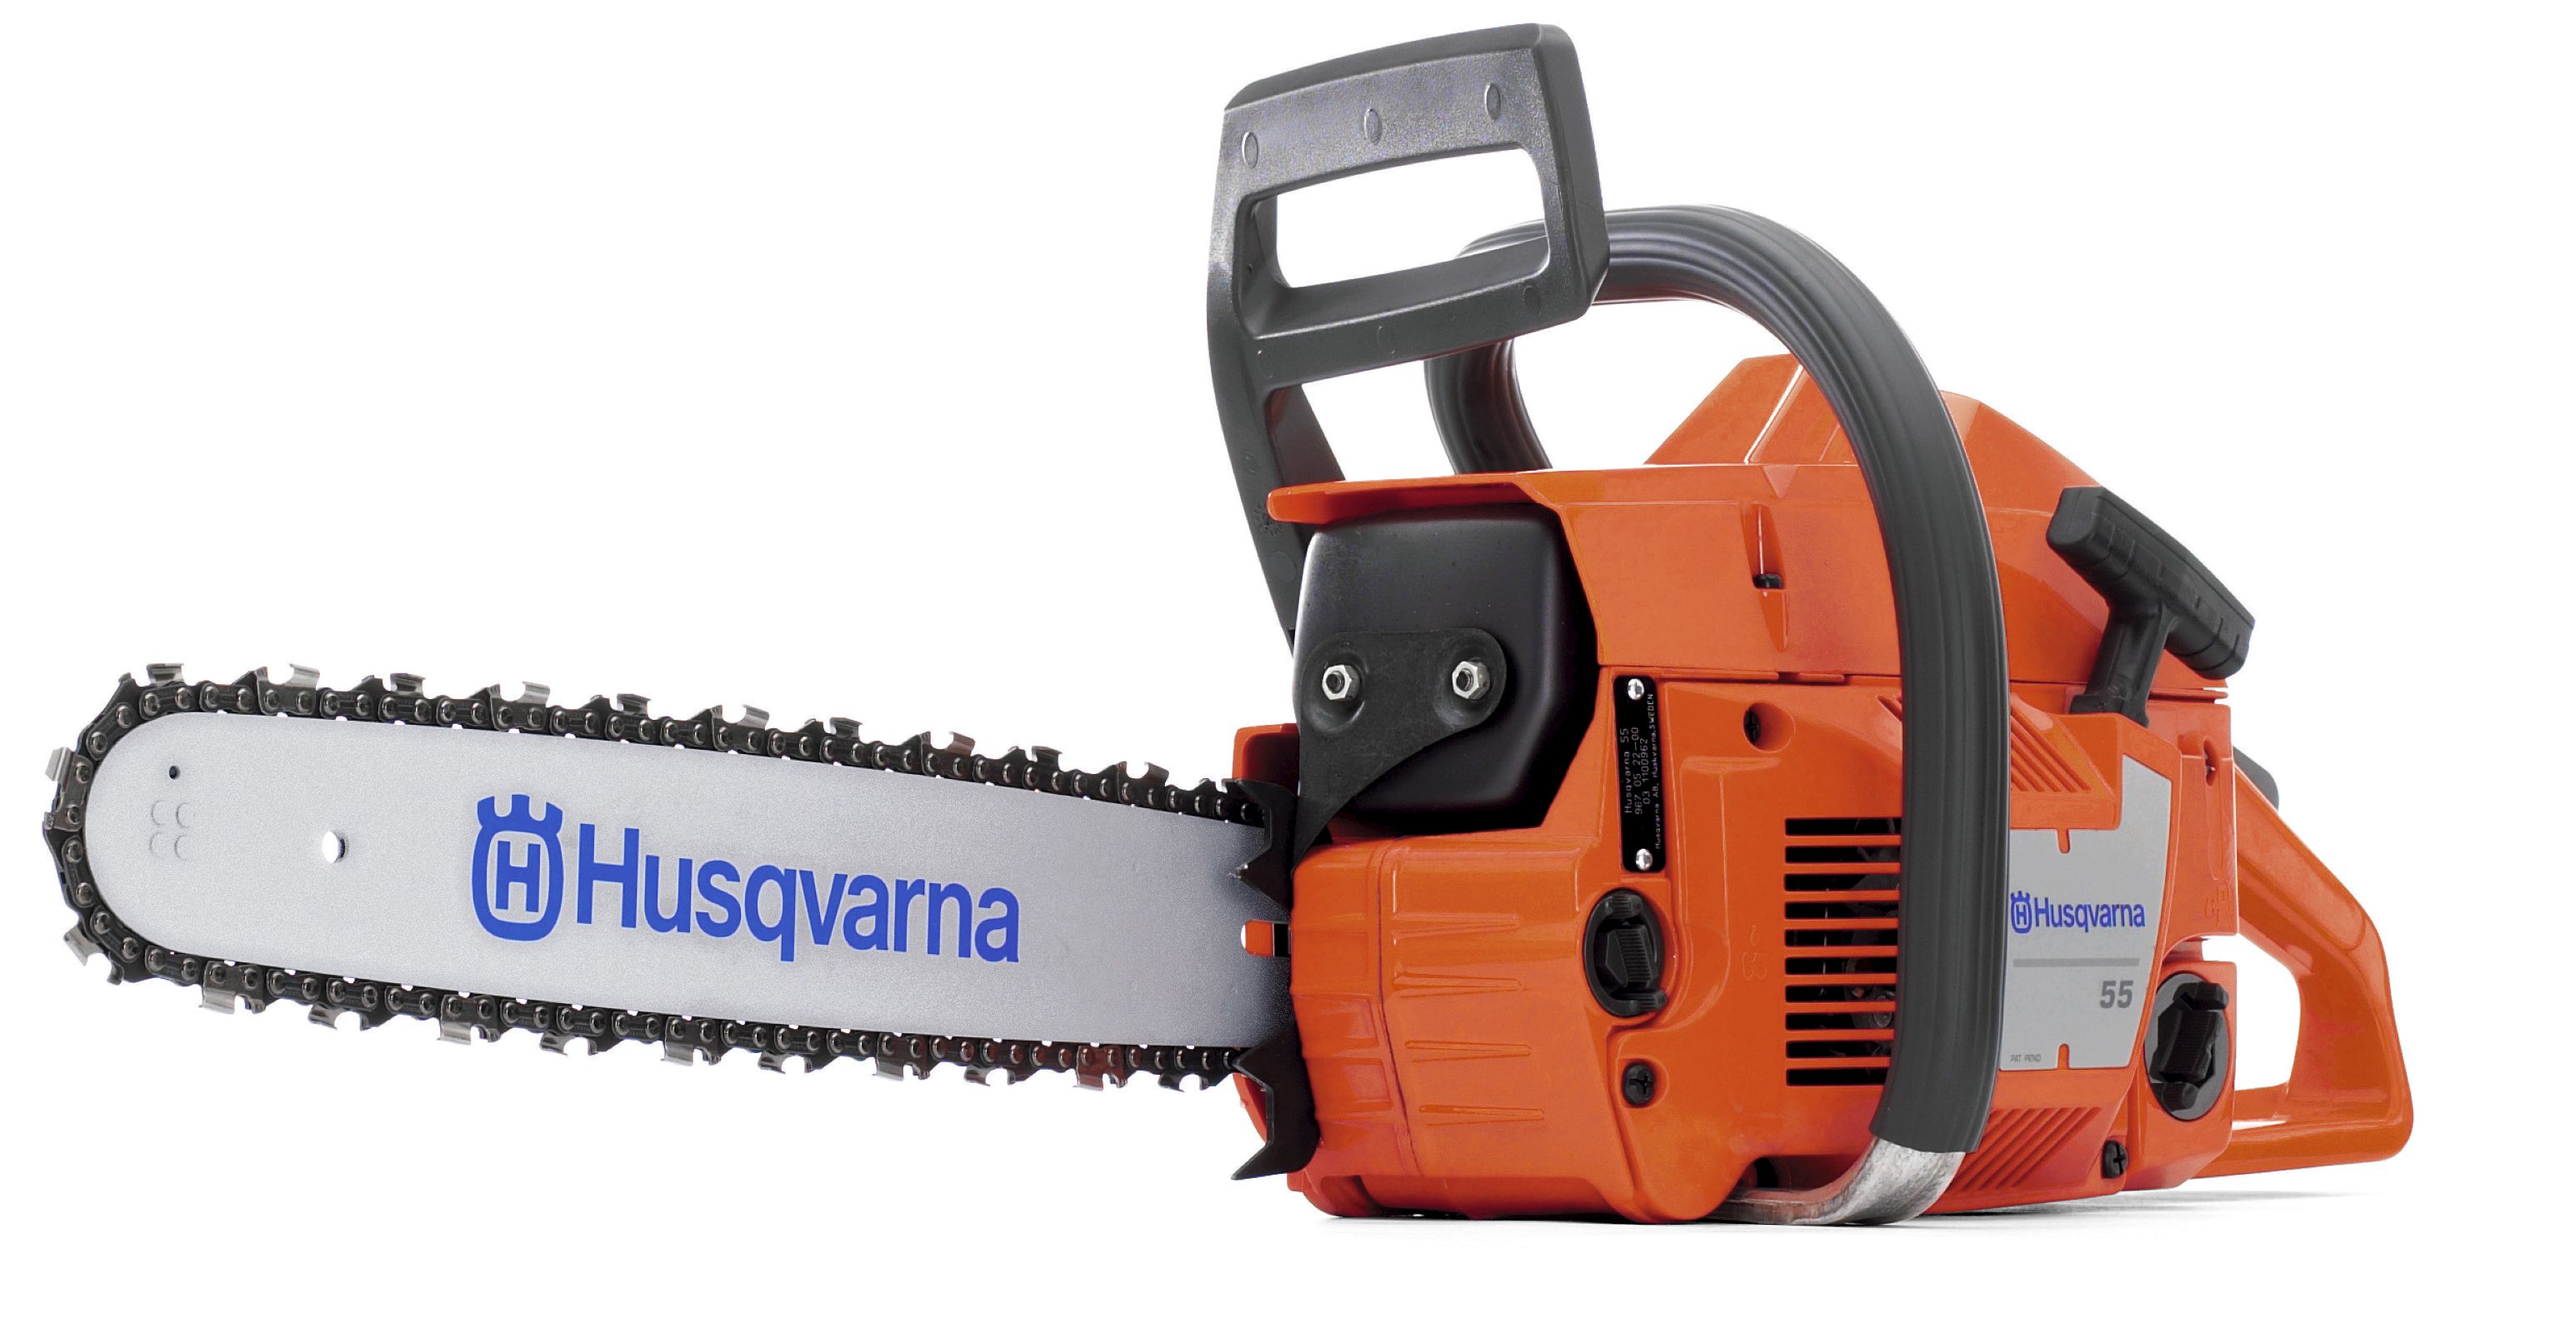 Husqvarna Chainsaw Return Policy